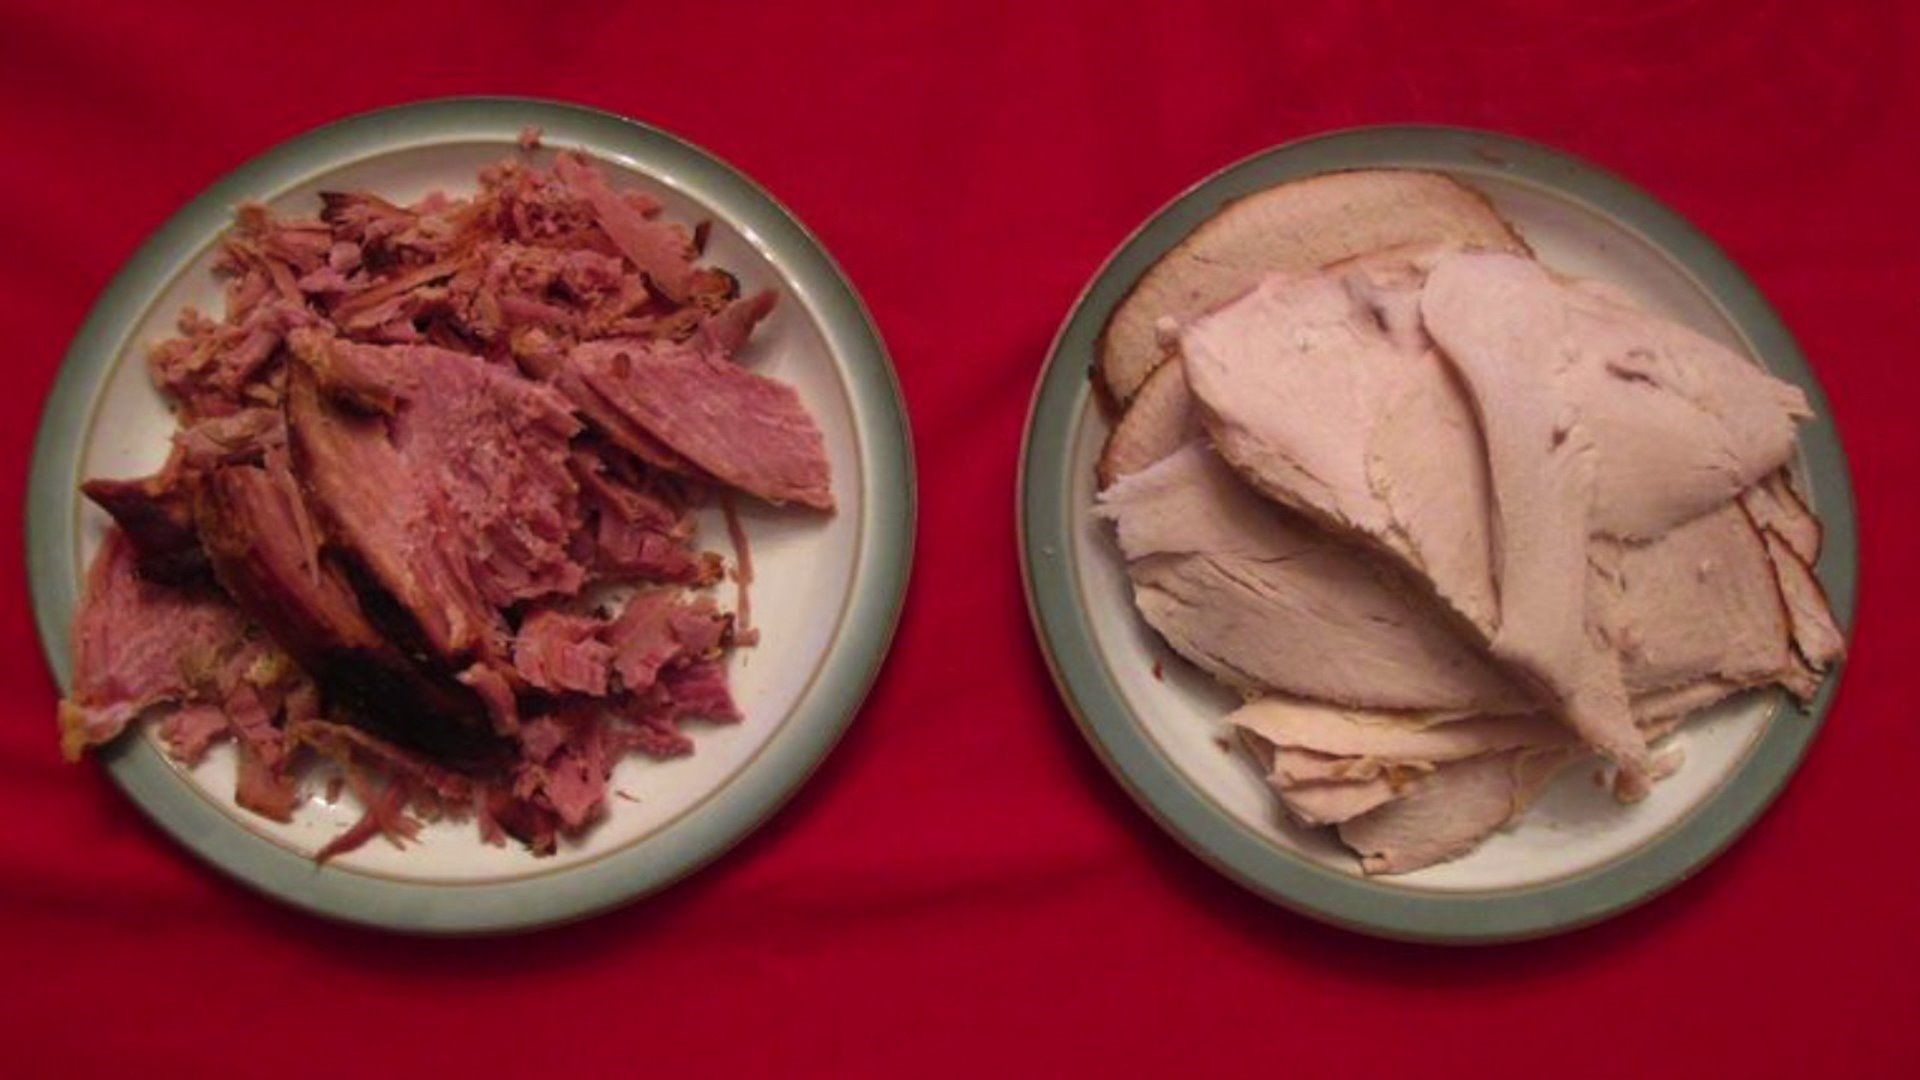 Wham Cam: White Meat vs. Dark Meat?